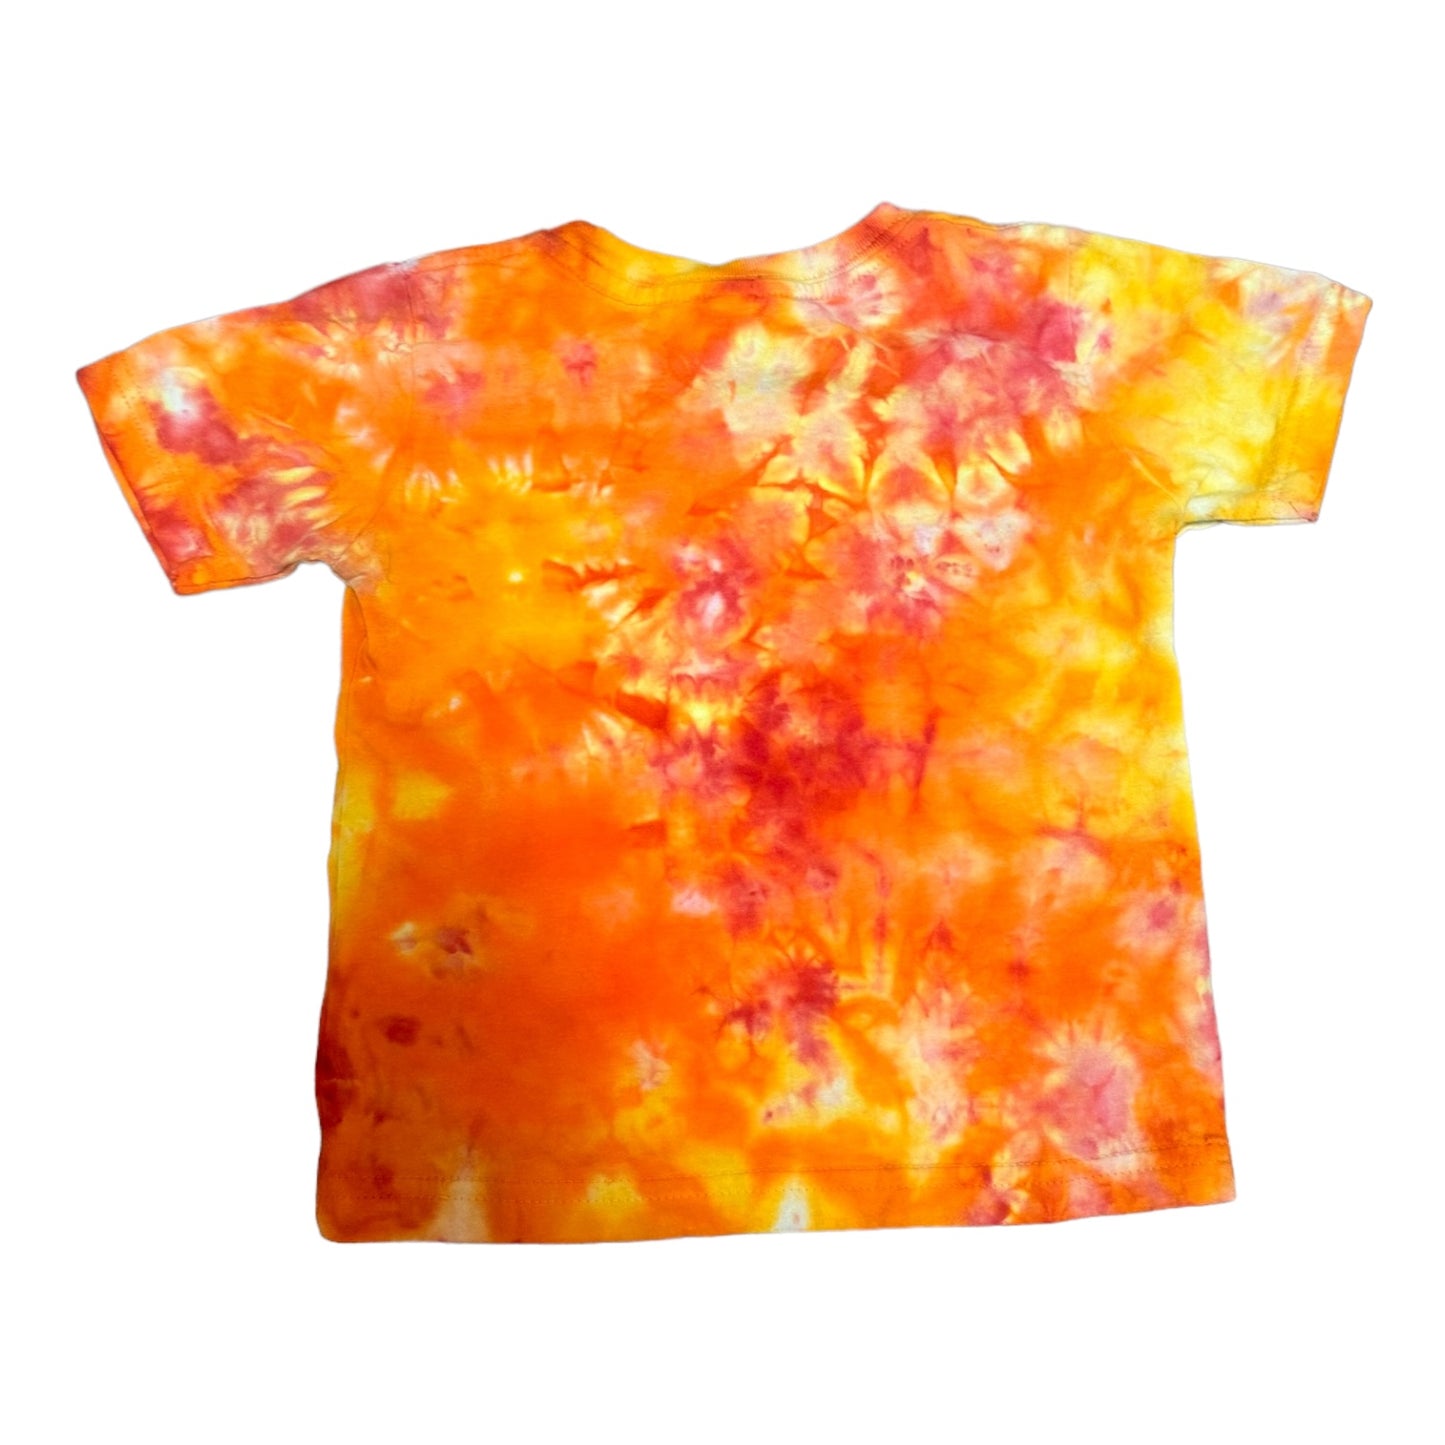 Toddler 2T Red Yellow and Orange Scrunch Ice Dye Tie Dye Shirt